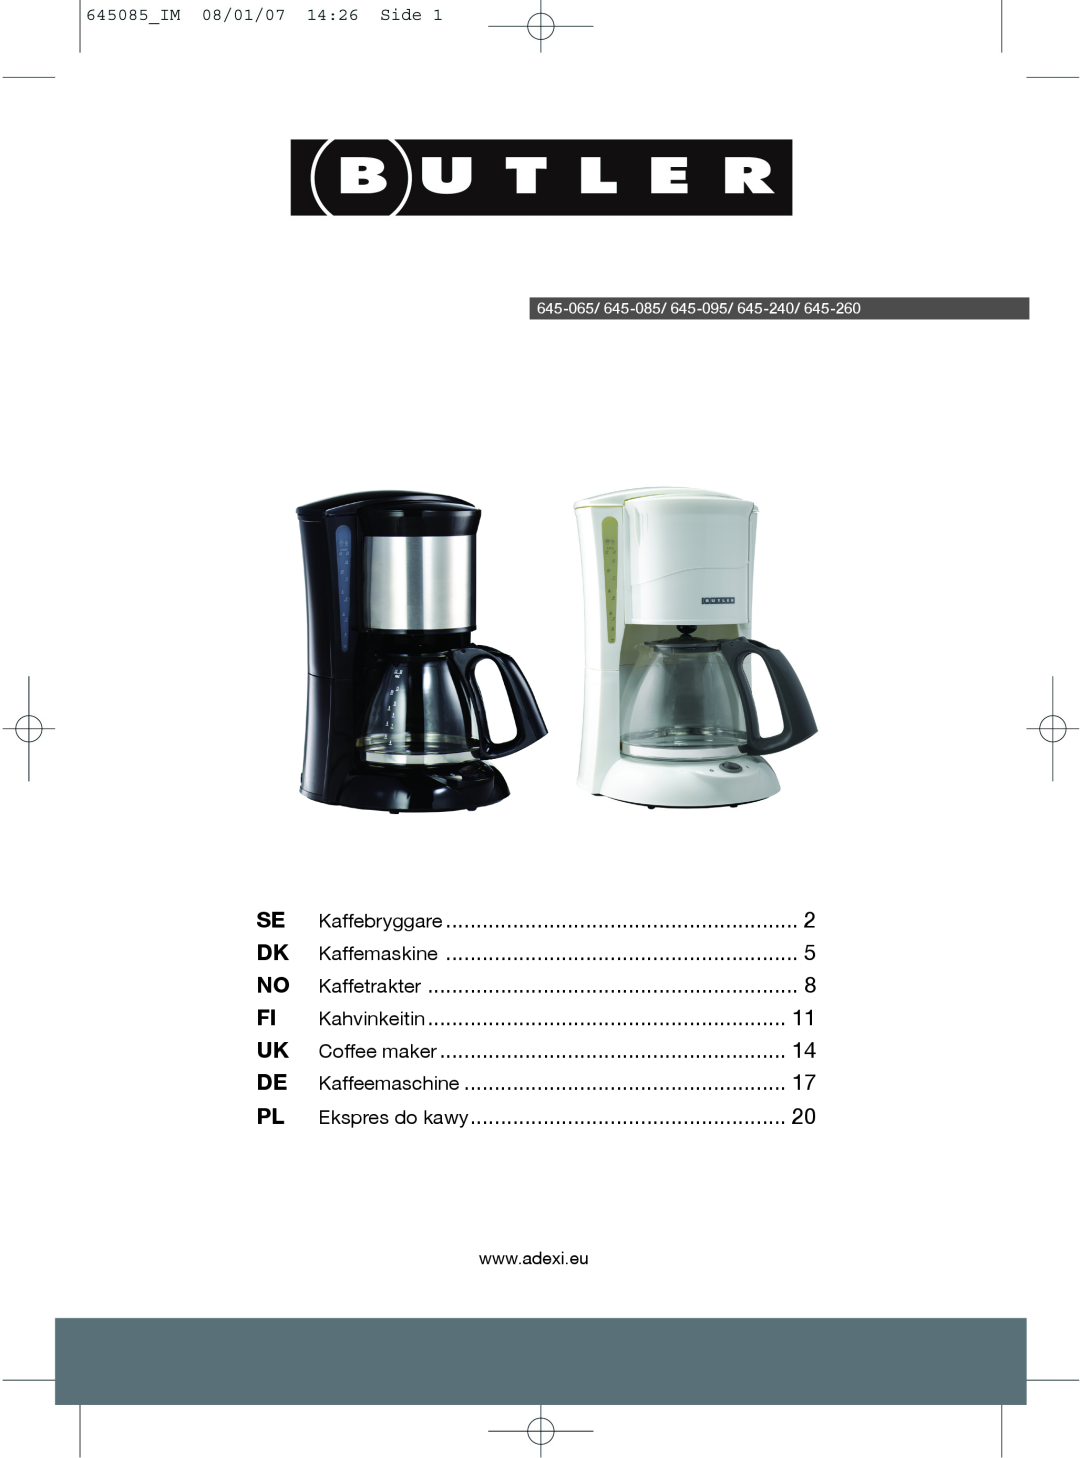 Butler 645-260 manual Kaffebryggare, Kaffemaskine, Kaffetrakter, Kahvinkeitin, Coffee maker, Kaffeemaschine 